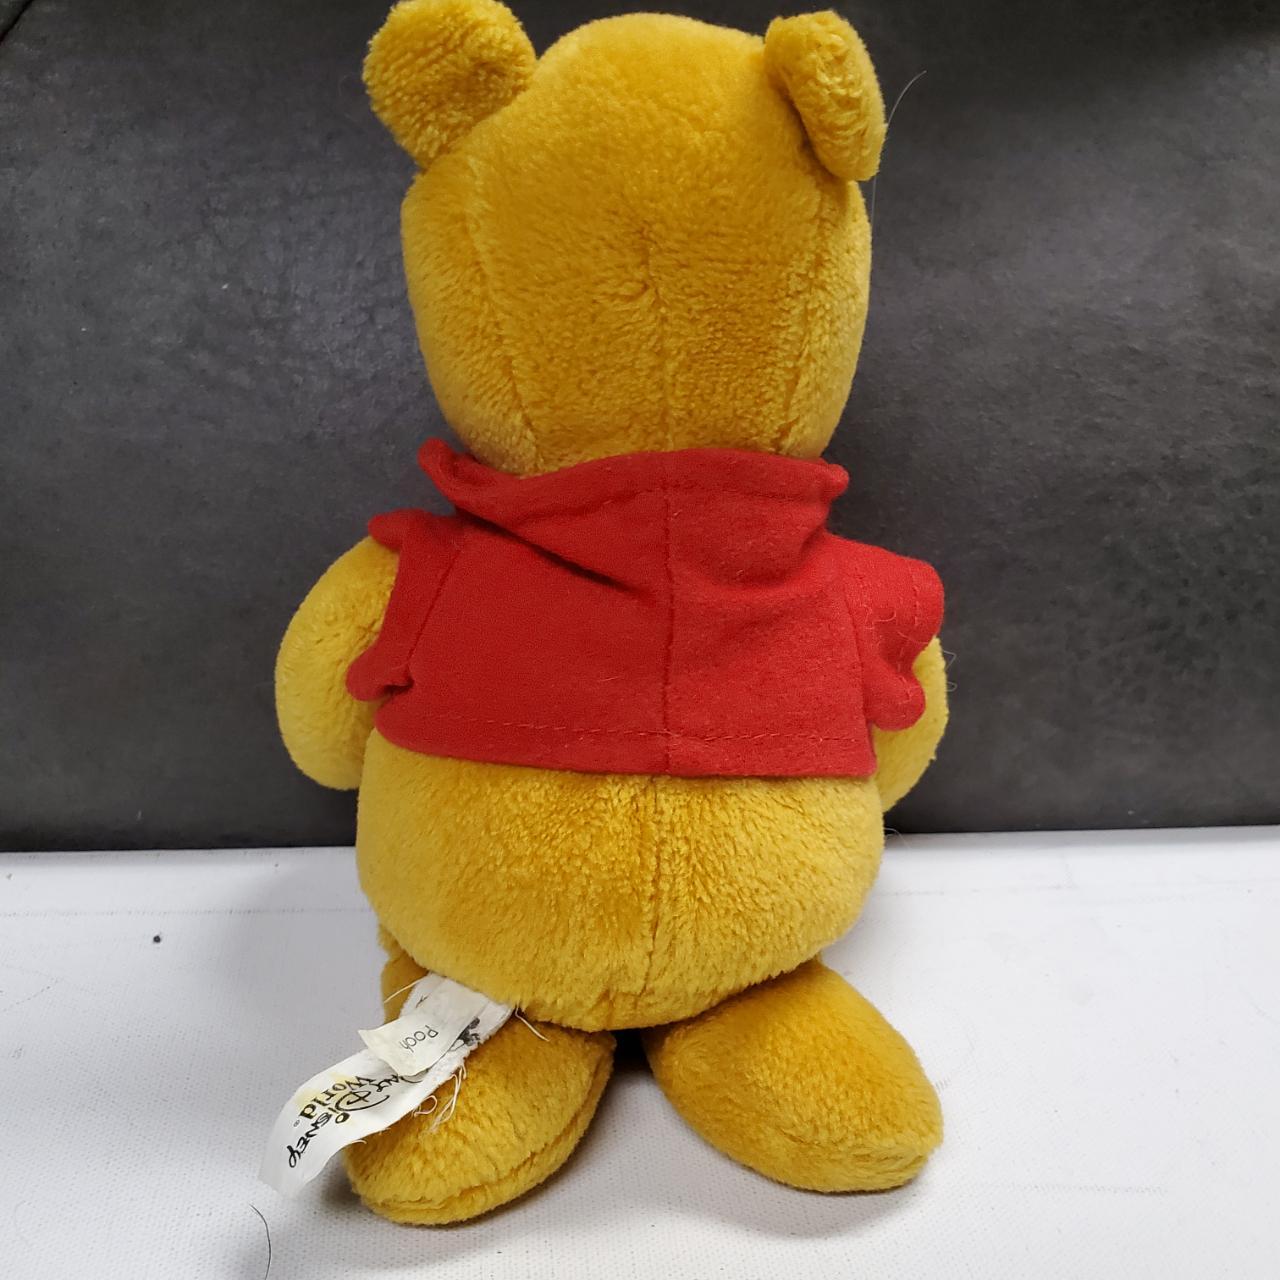 Plush Winnie the Pooh Stuffed Animal wearing red... - Depop